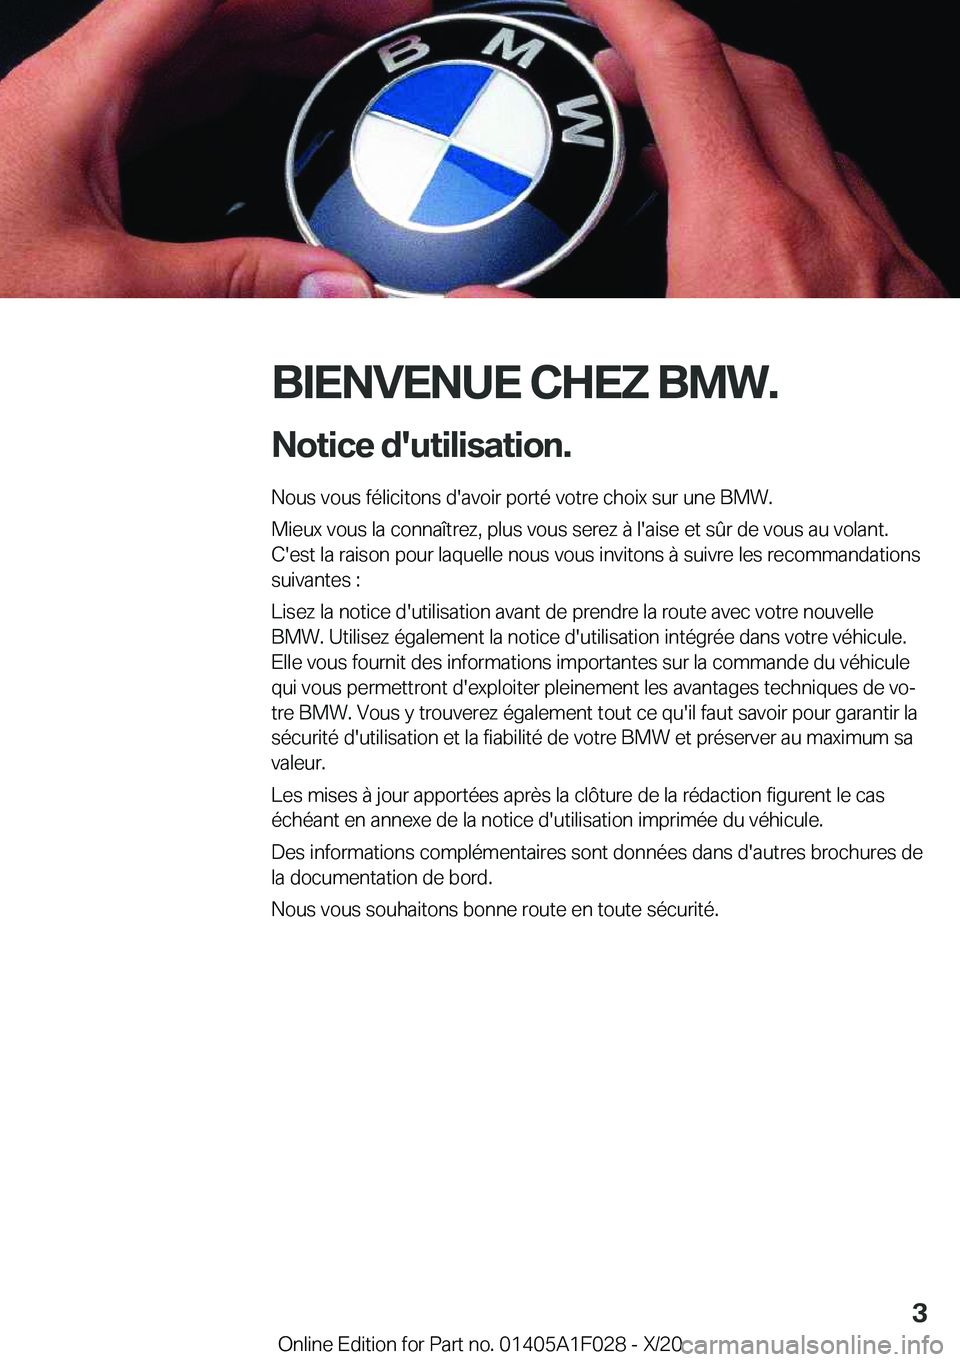 BMW X1 2021  Notices Demploi (in French) �B�I�E�N�V�E�N�U�E��C�H�E�Z��B�M�W�.�N�o�t�i�c�e��d�'�u�t�i�l�i�s�a�t�i�o�n�.
�N�o�u�s��v�o�u�s��f�é�l�i�c�i�t�o�n�s��d�'�a�v�o�i�r��p�o�r�t�é��v�o�t�r�e��c�h�o�i�x��s�u�r��u�n�e�